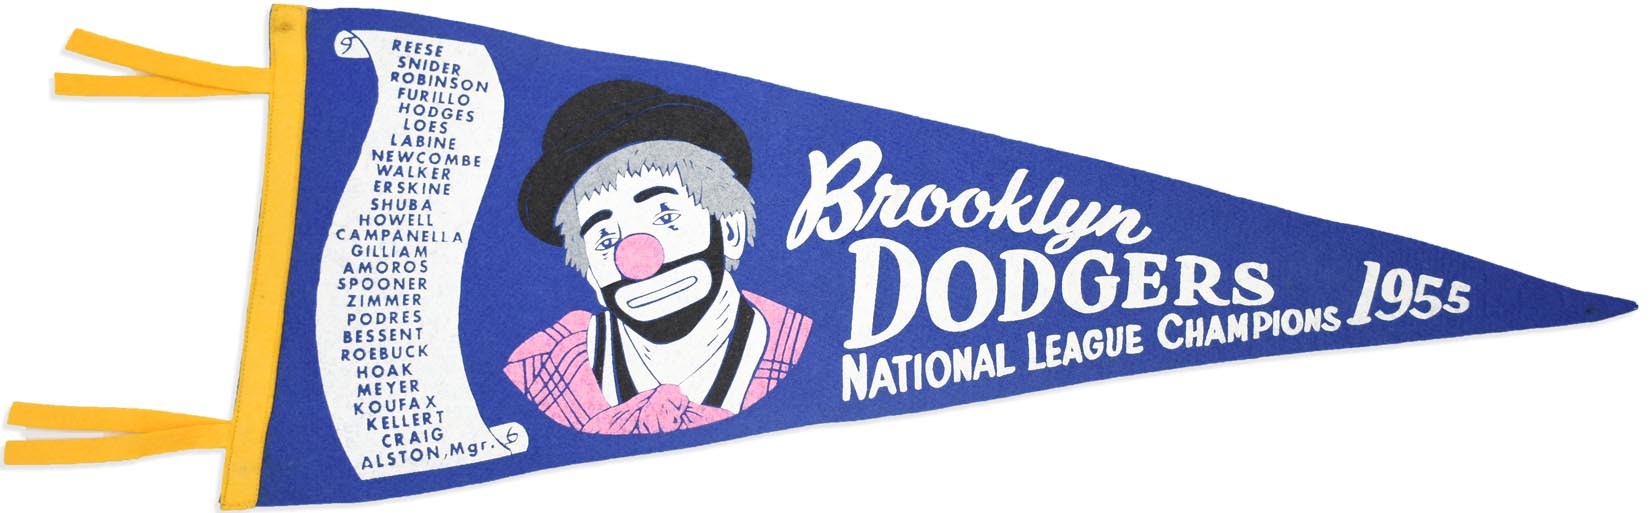 Jackie Robinson & Brooklyn Dodgers - High Grade 1955 World Champion Brooklyn Dodgers Pennant